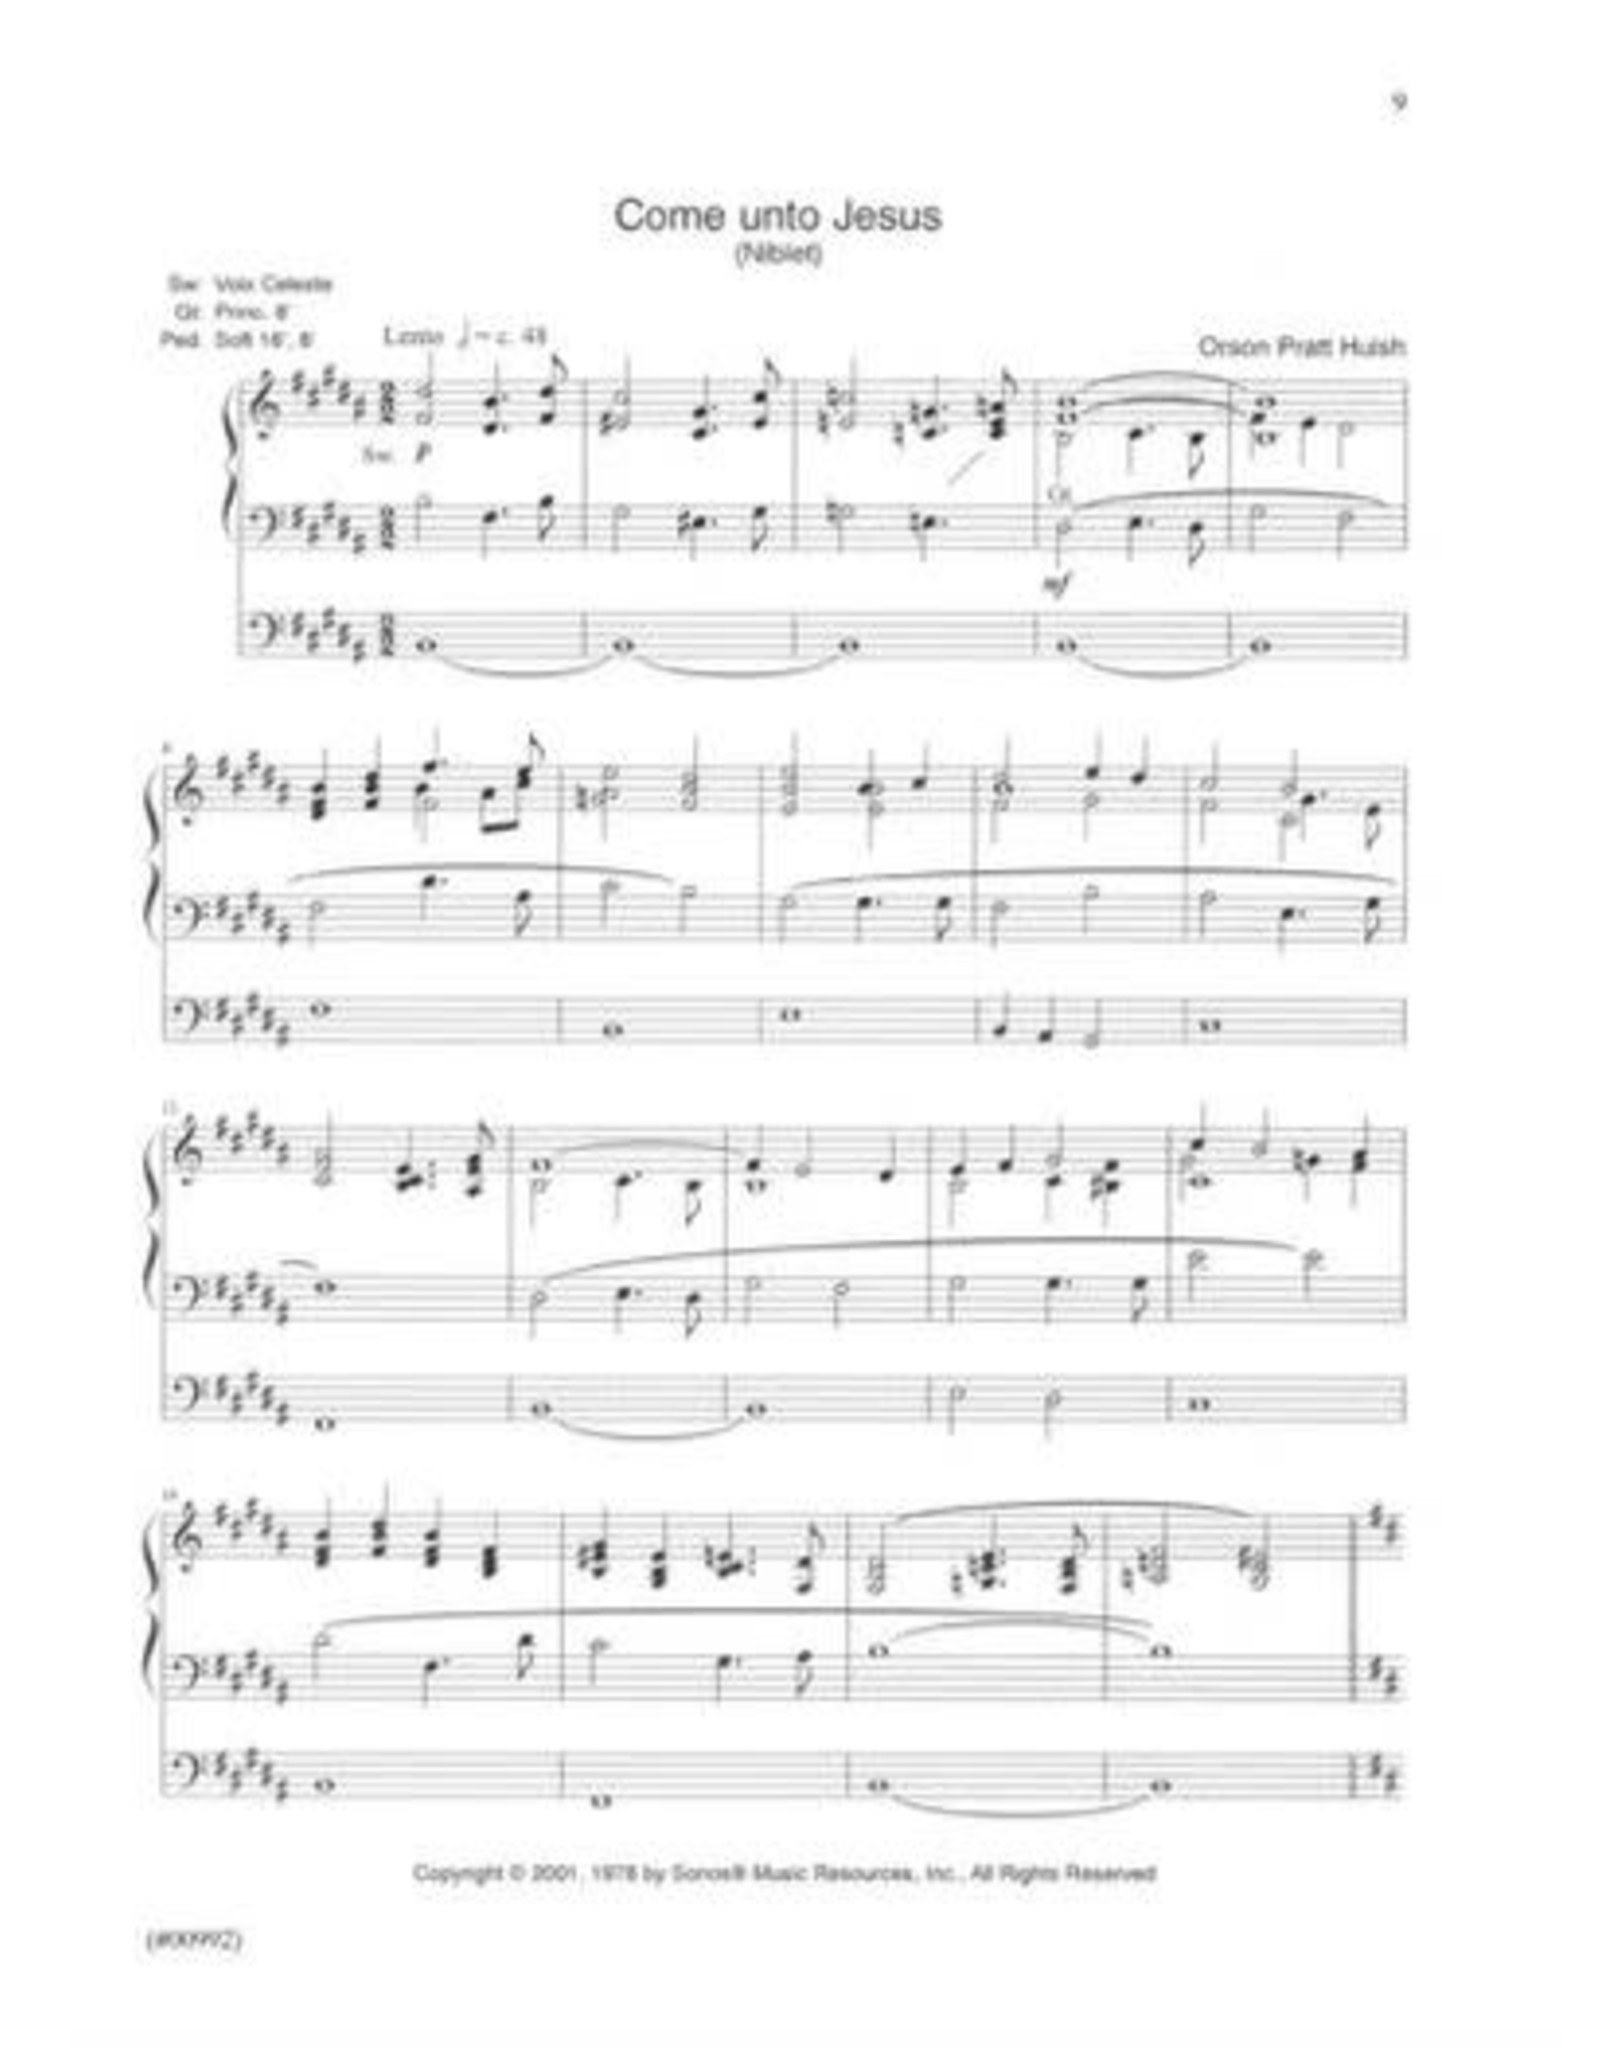 Jackman Music From the Tabernacle Volume 1 - Robert Cundick and John Longhurst